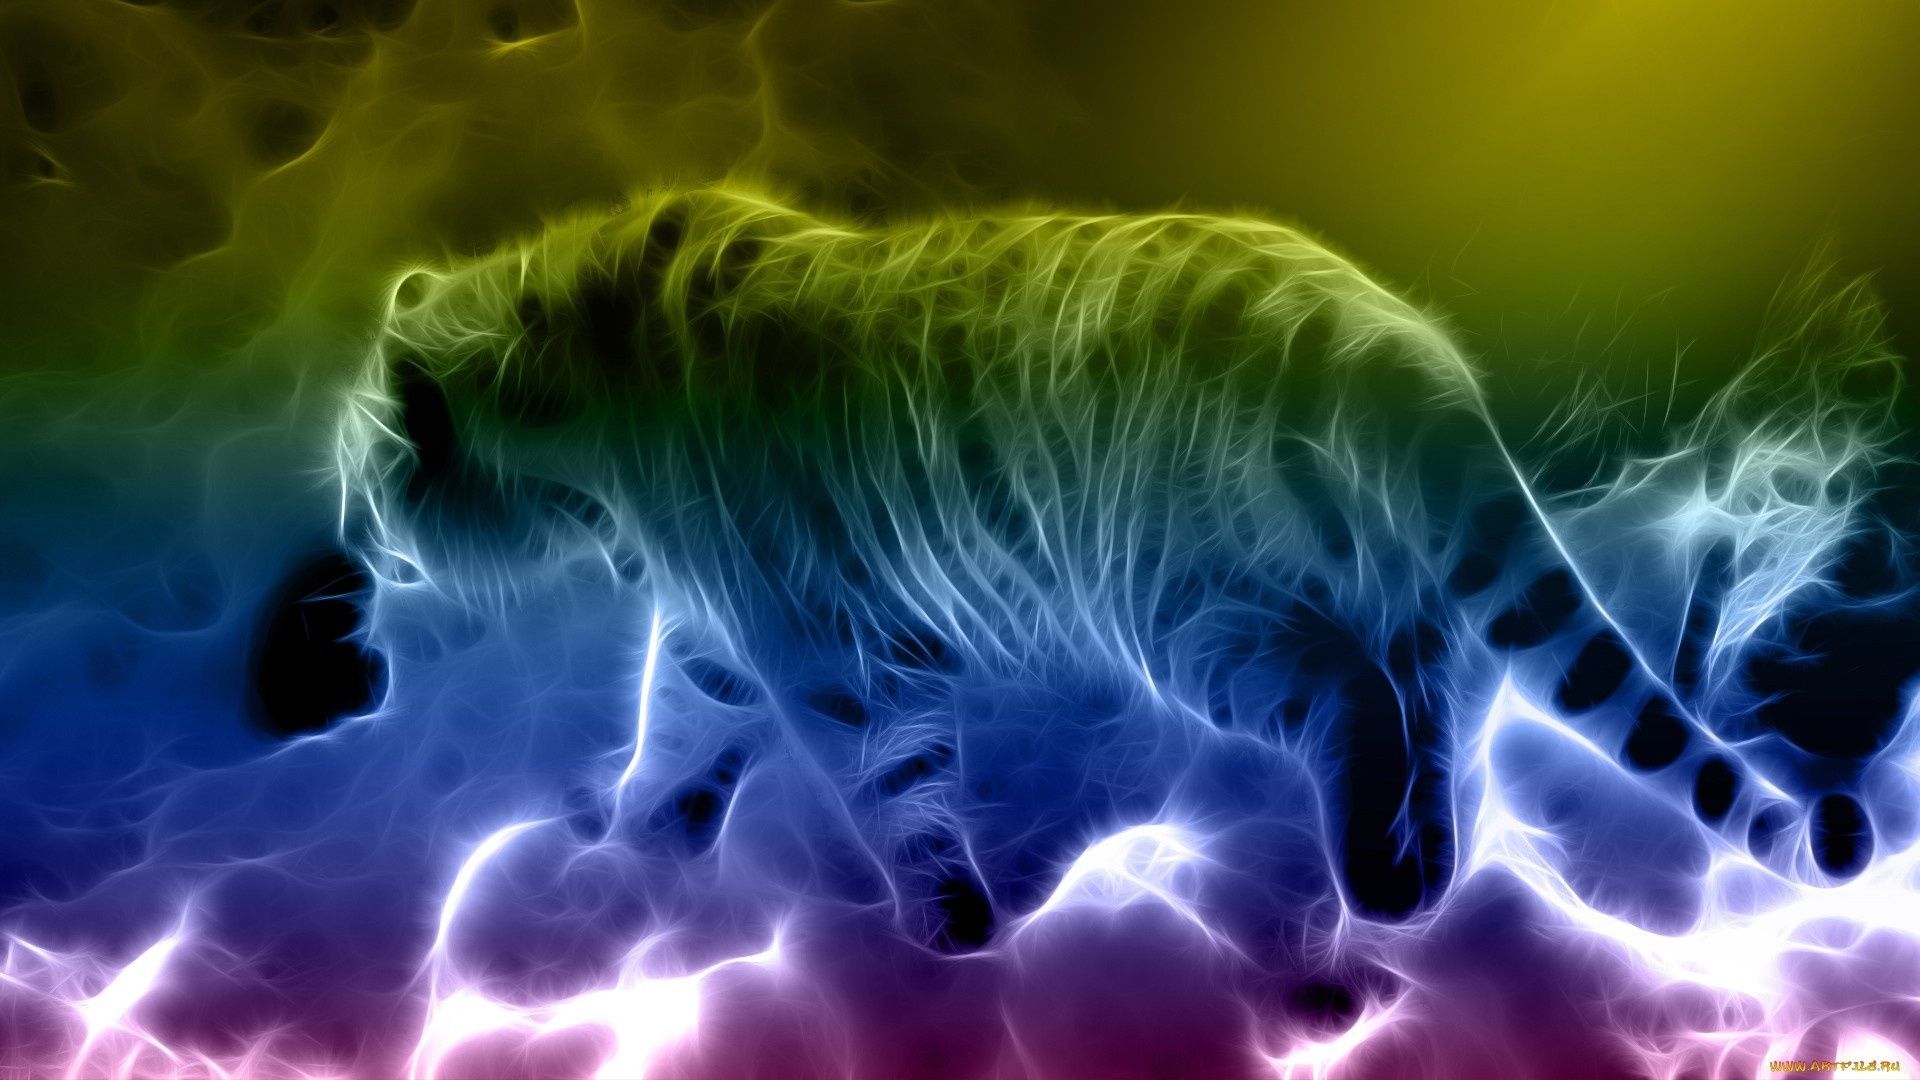 Download Download Pretty Fantasy Rainbow Tiger Wallpaper. Full HD